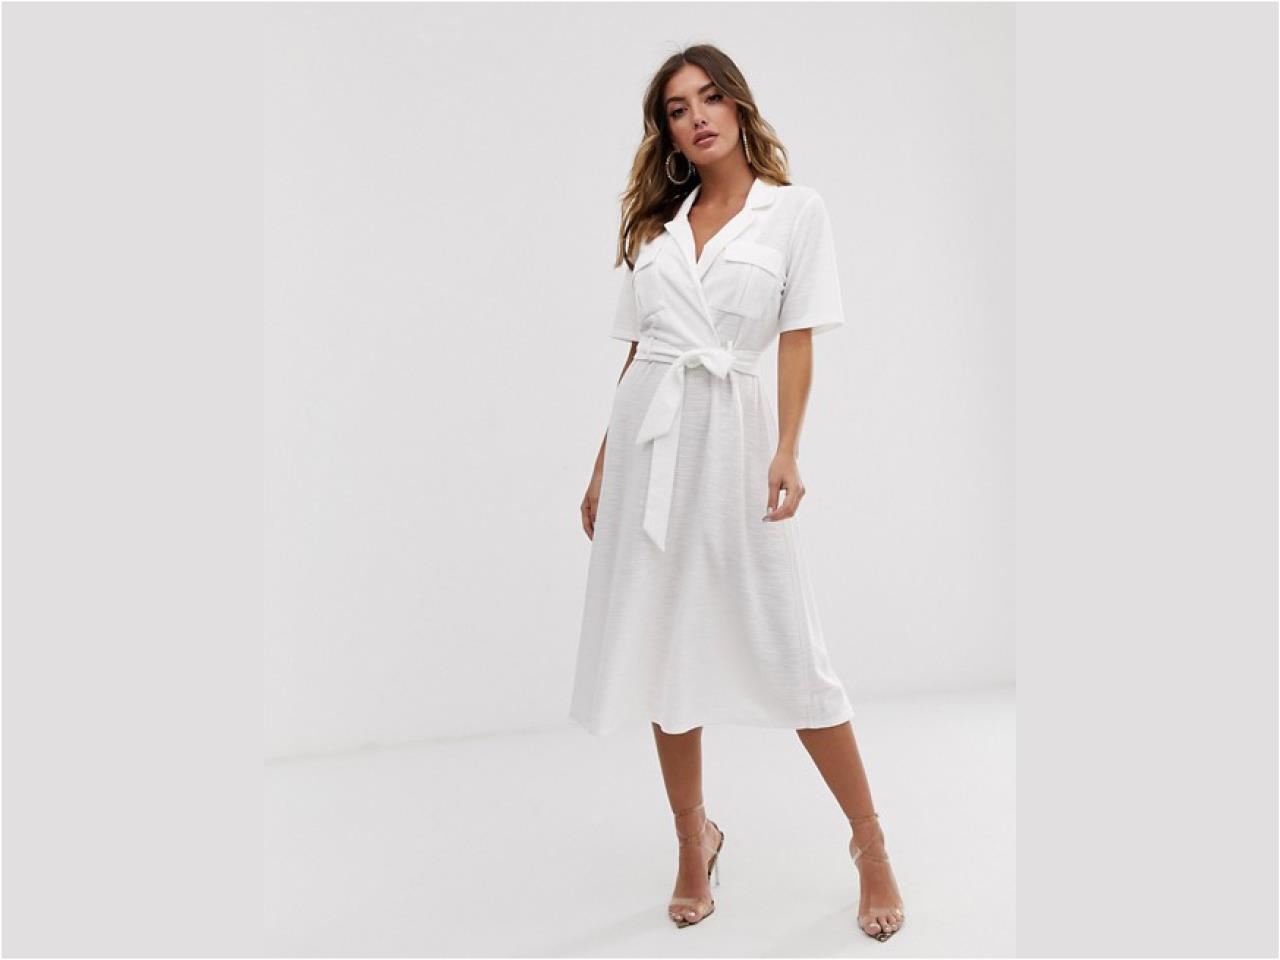 letizia vestido blanco vestido asos 44,99€